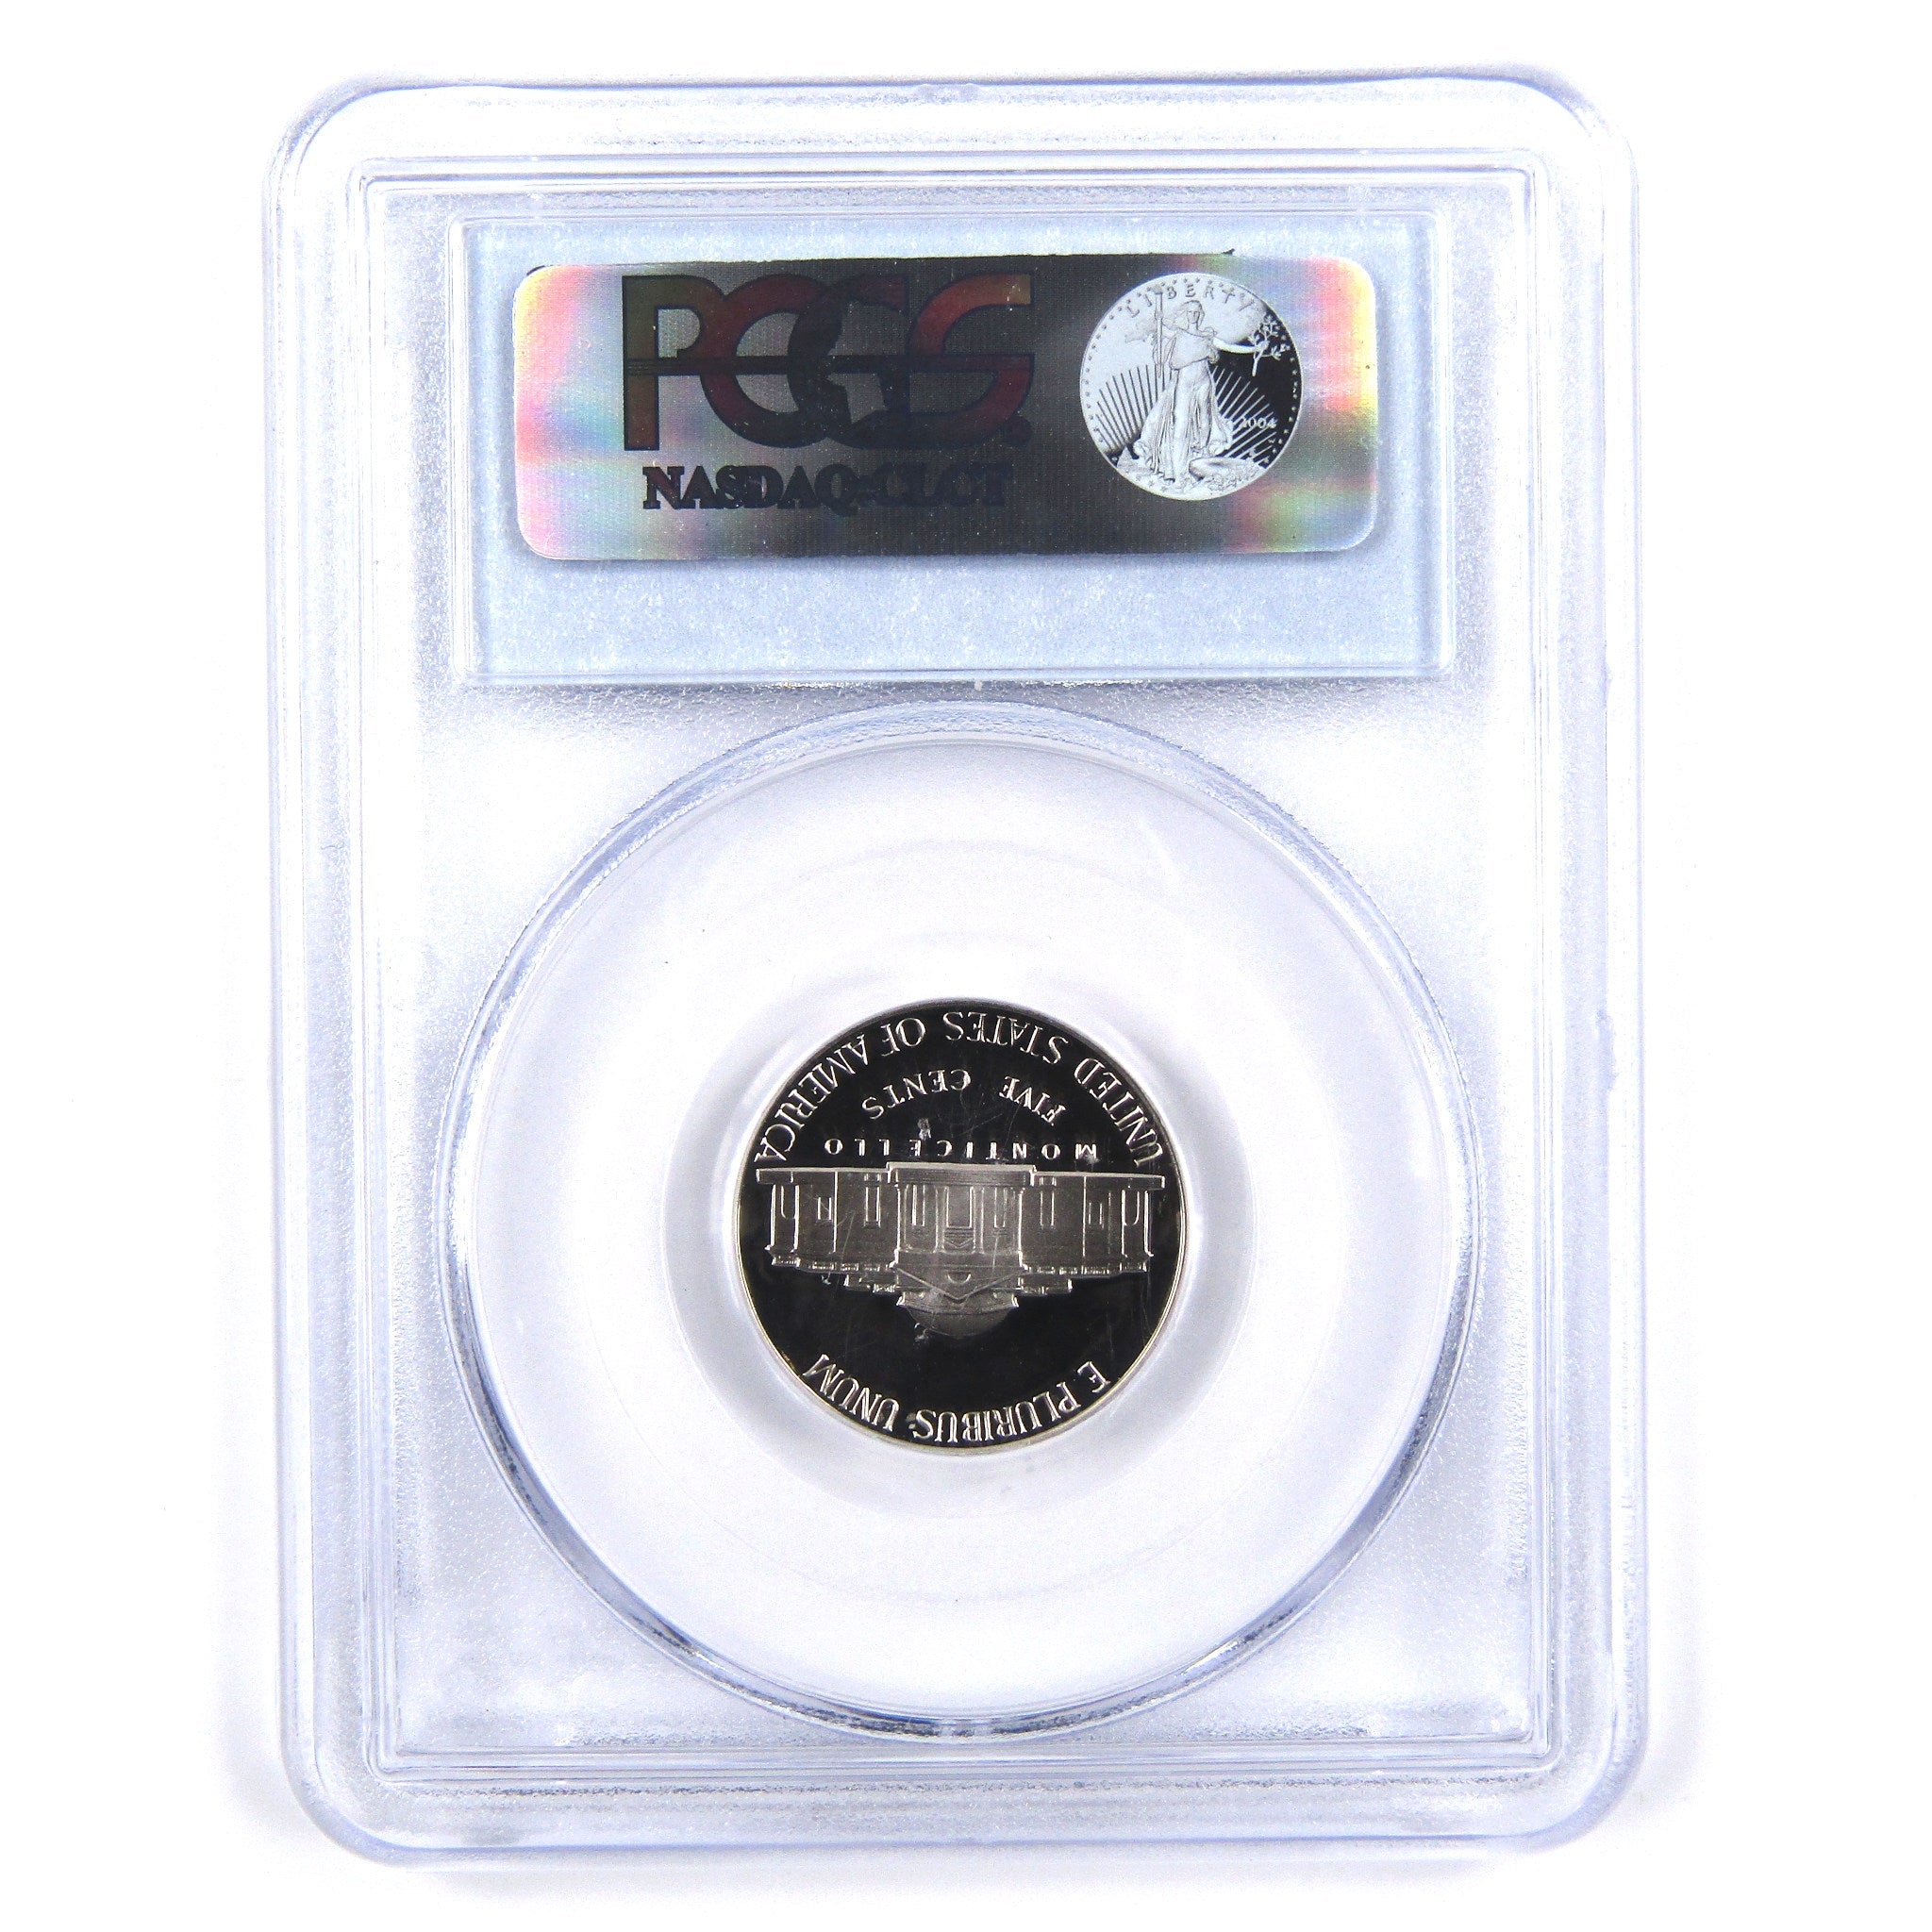 1990 S Jefferson Nickel 5 Cent Piece PR 69 DCAM PCGS Proof SKU:CPC2378